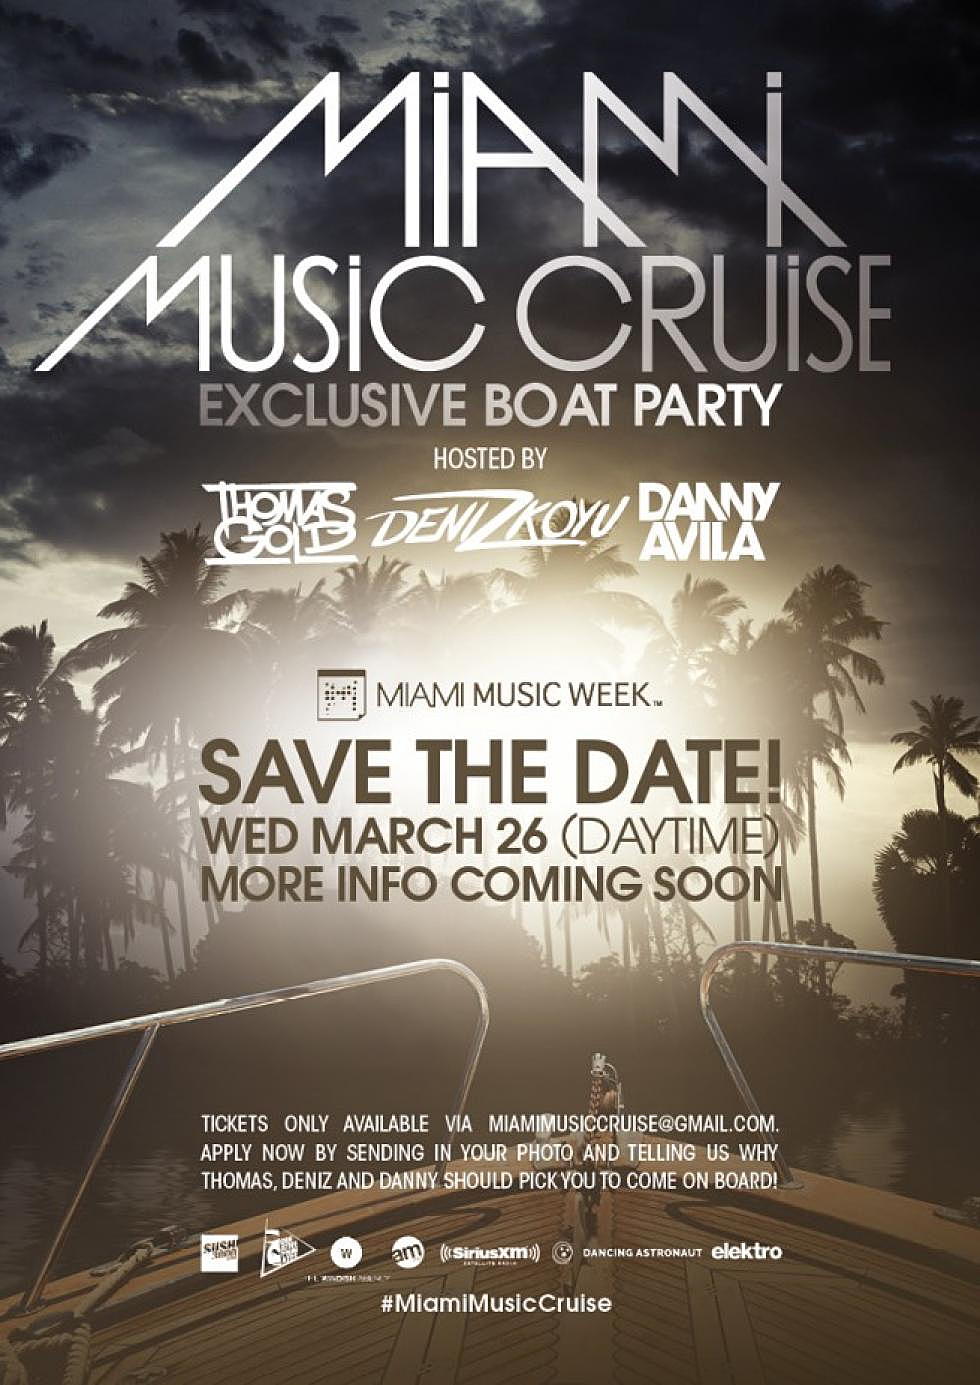 Take a cruise with Thomas Gold, Deniz Koyu, &#038; Danny Avila!